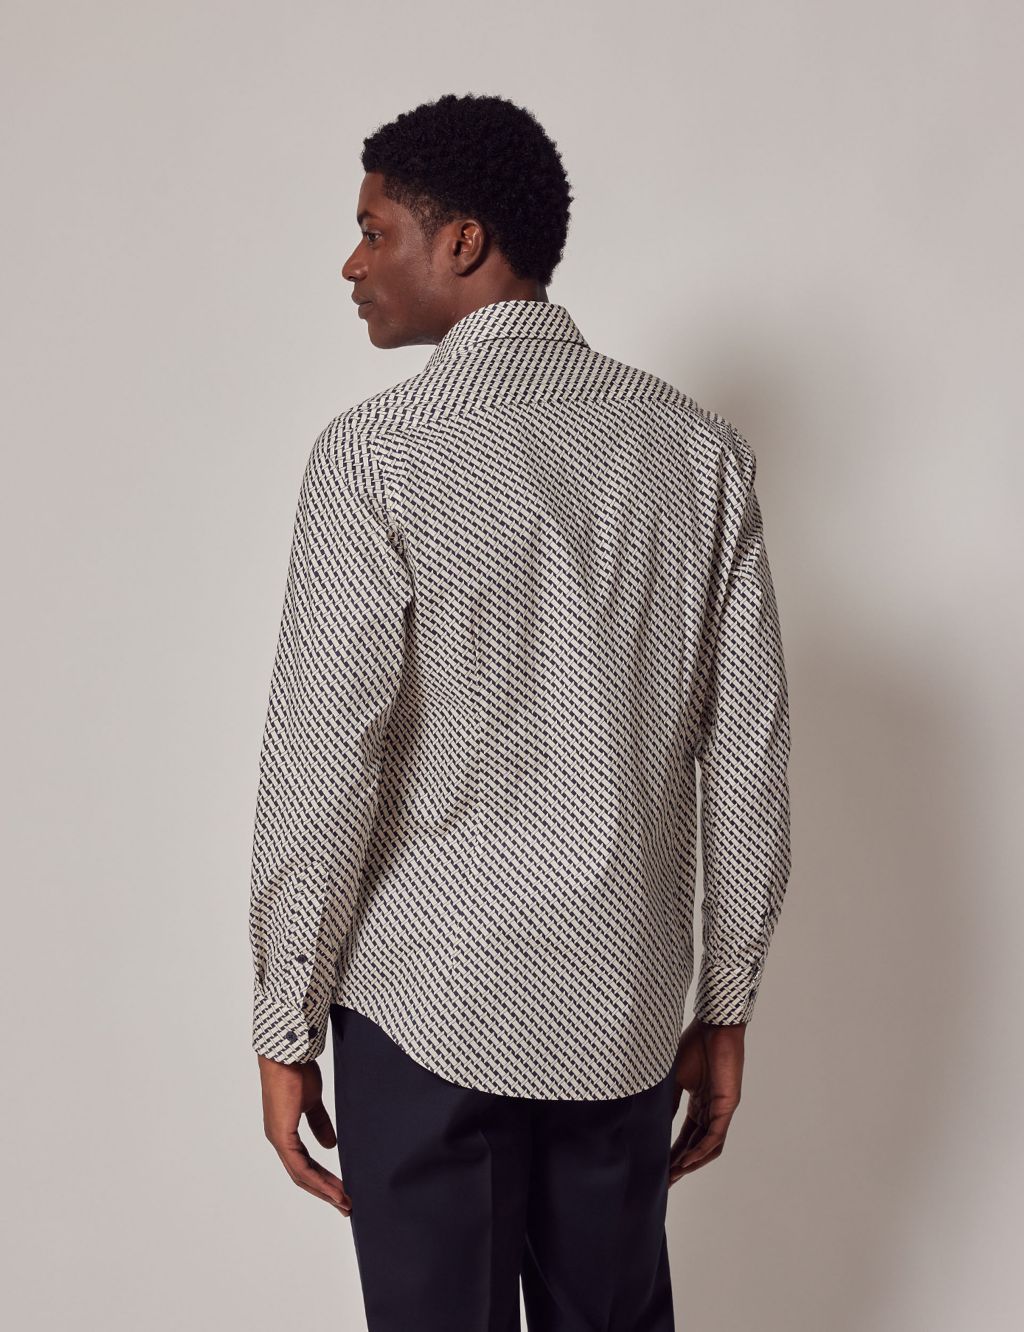 Pure Cotton Geometric Print Shirt image 3